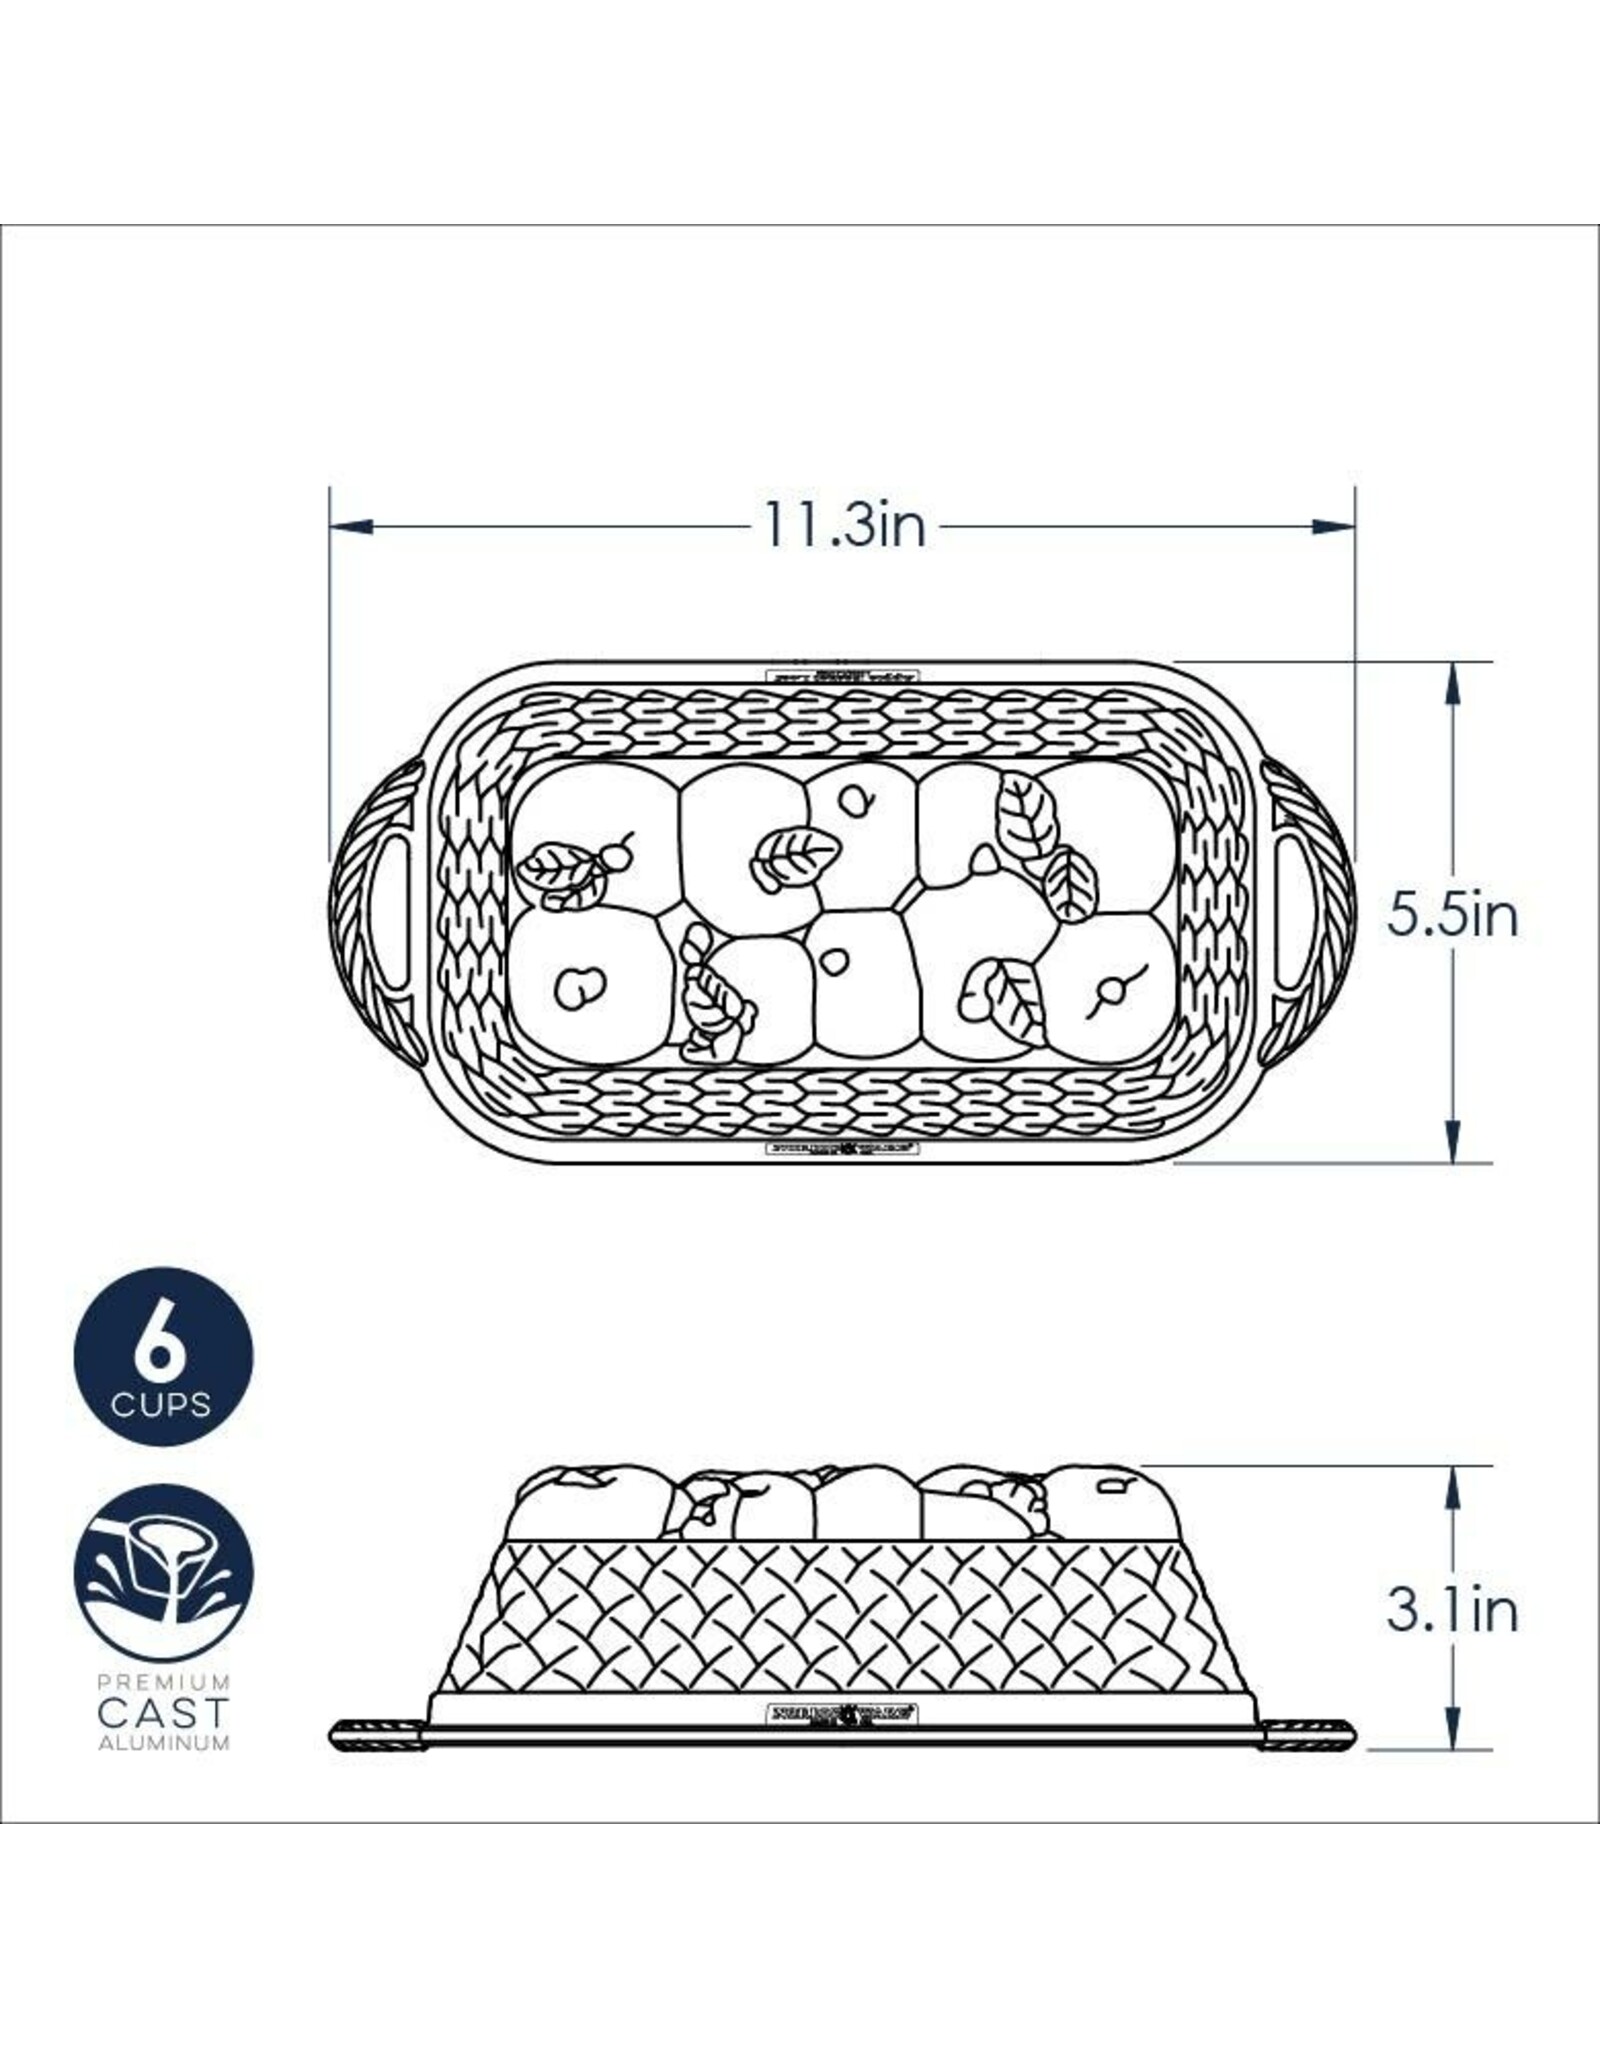 Nordic Ware Apple Loaf pan